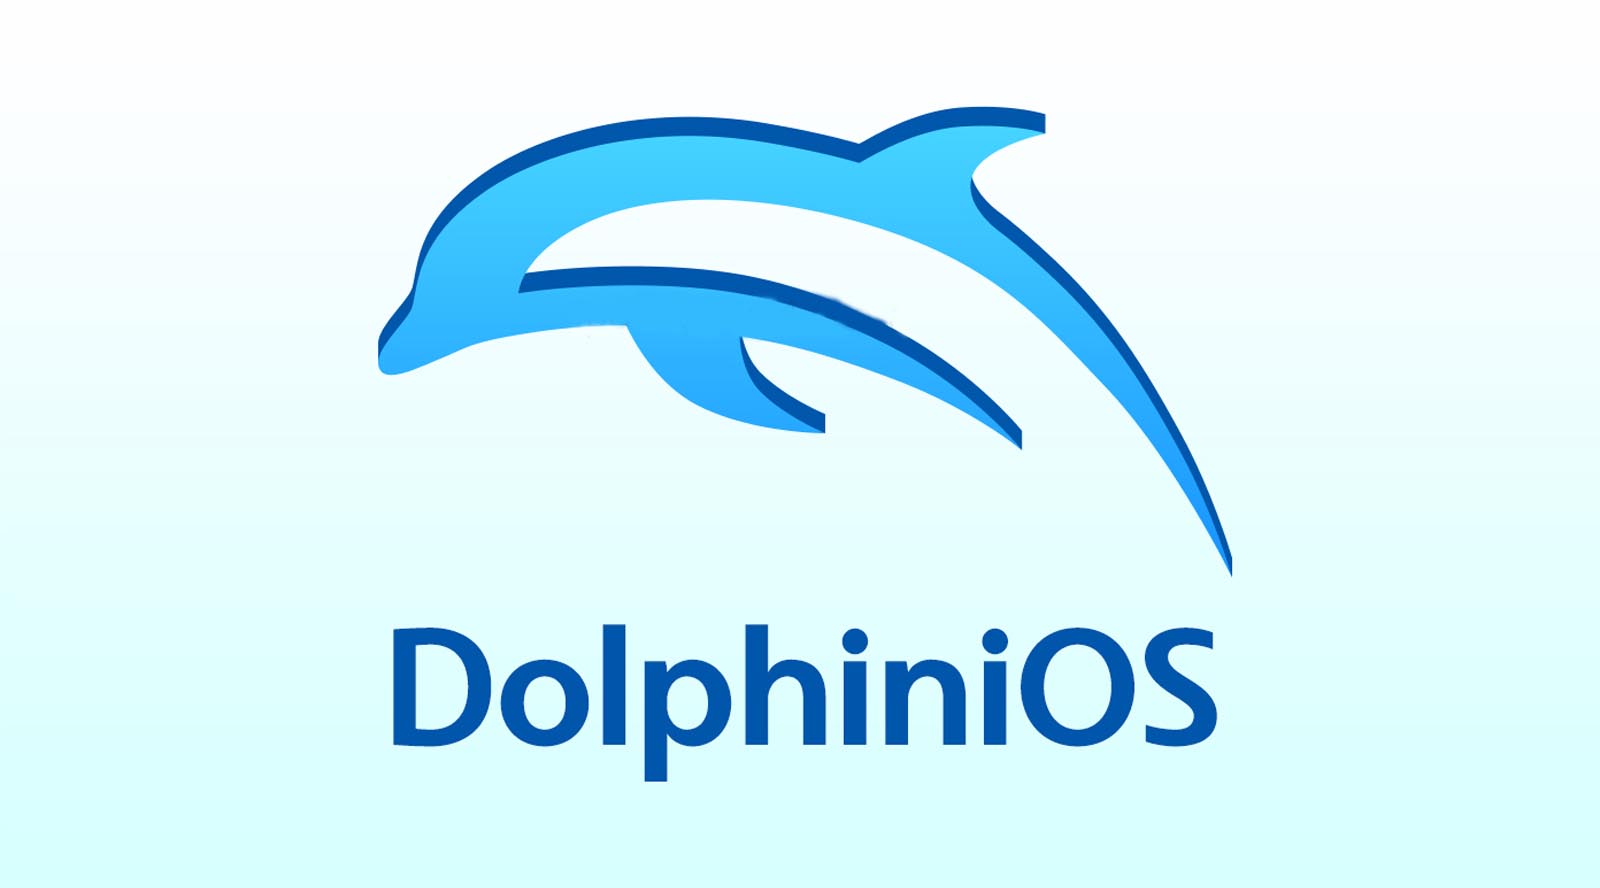 dolphin emulator games download mac